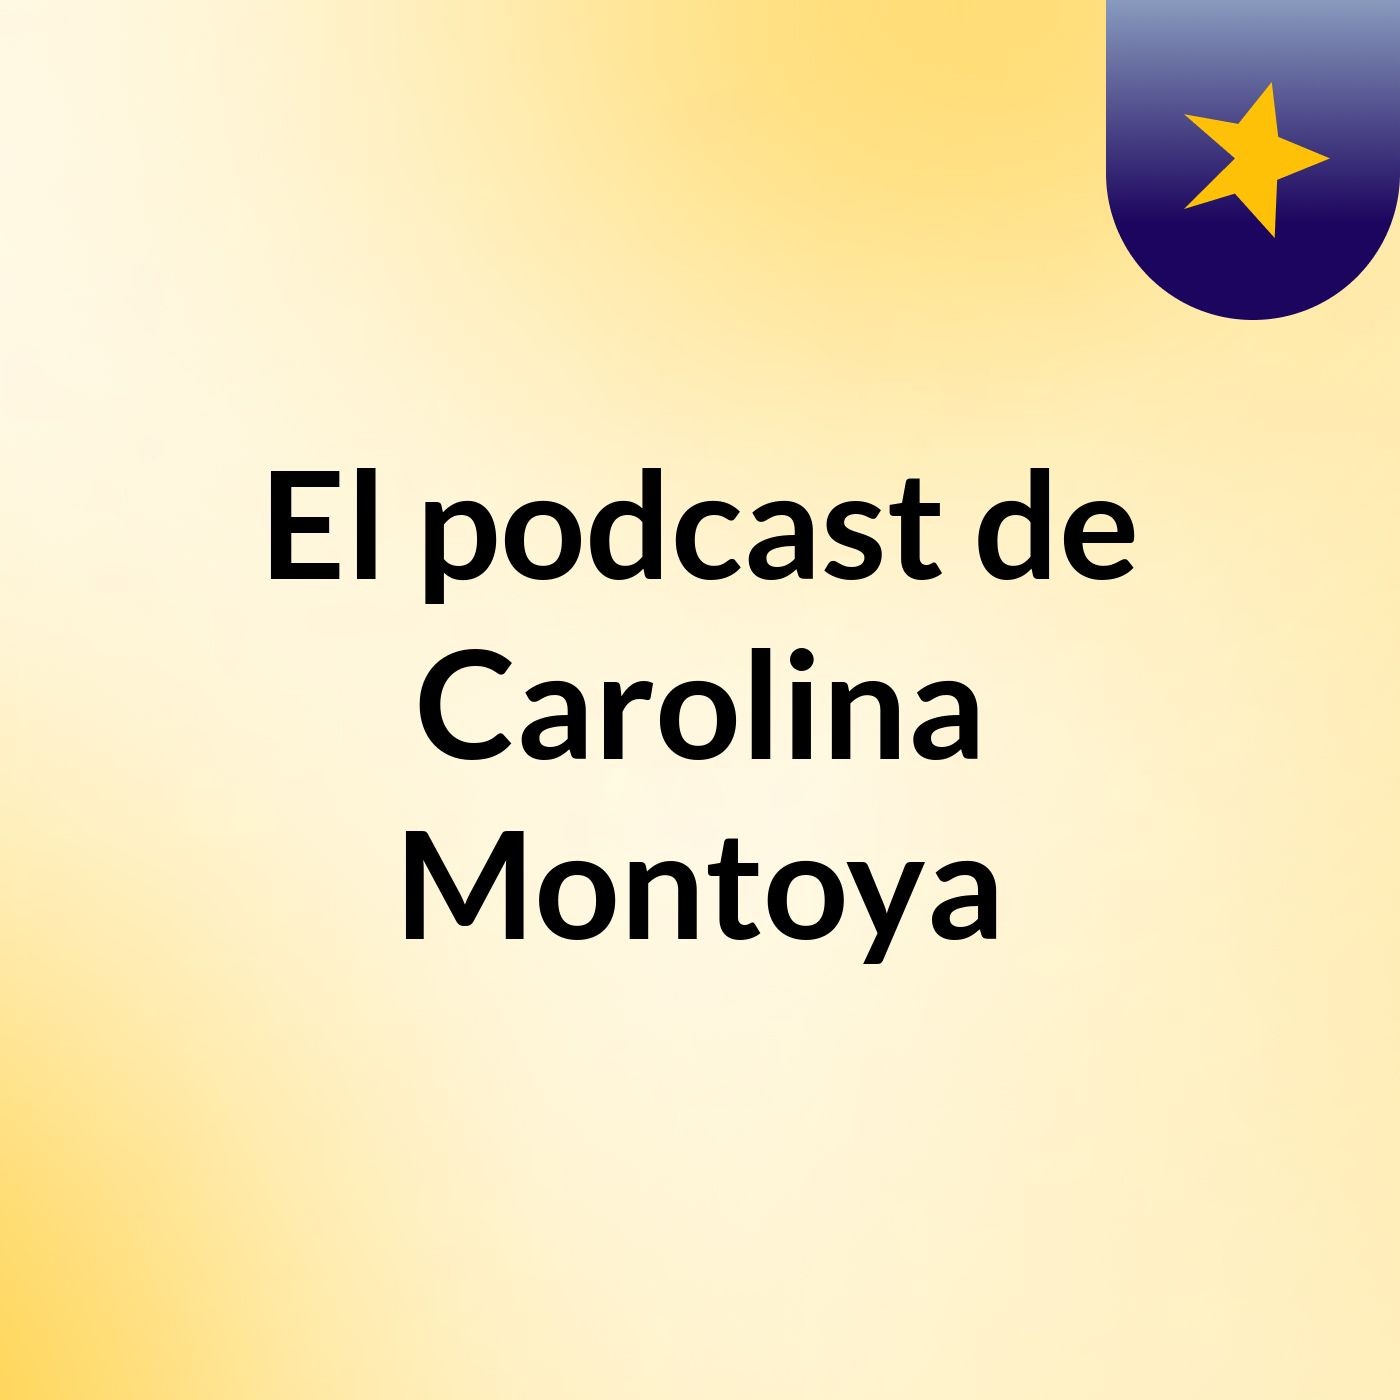 El podcast de Carolina Montoya